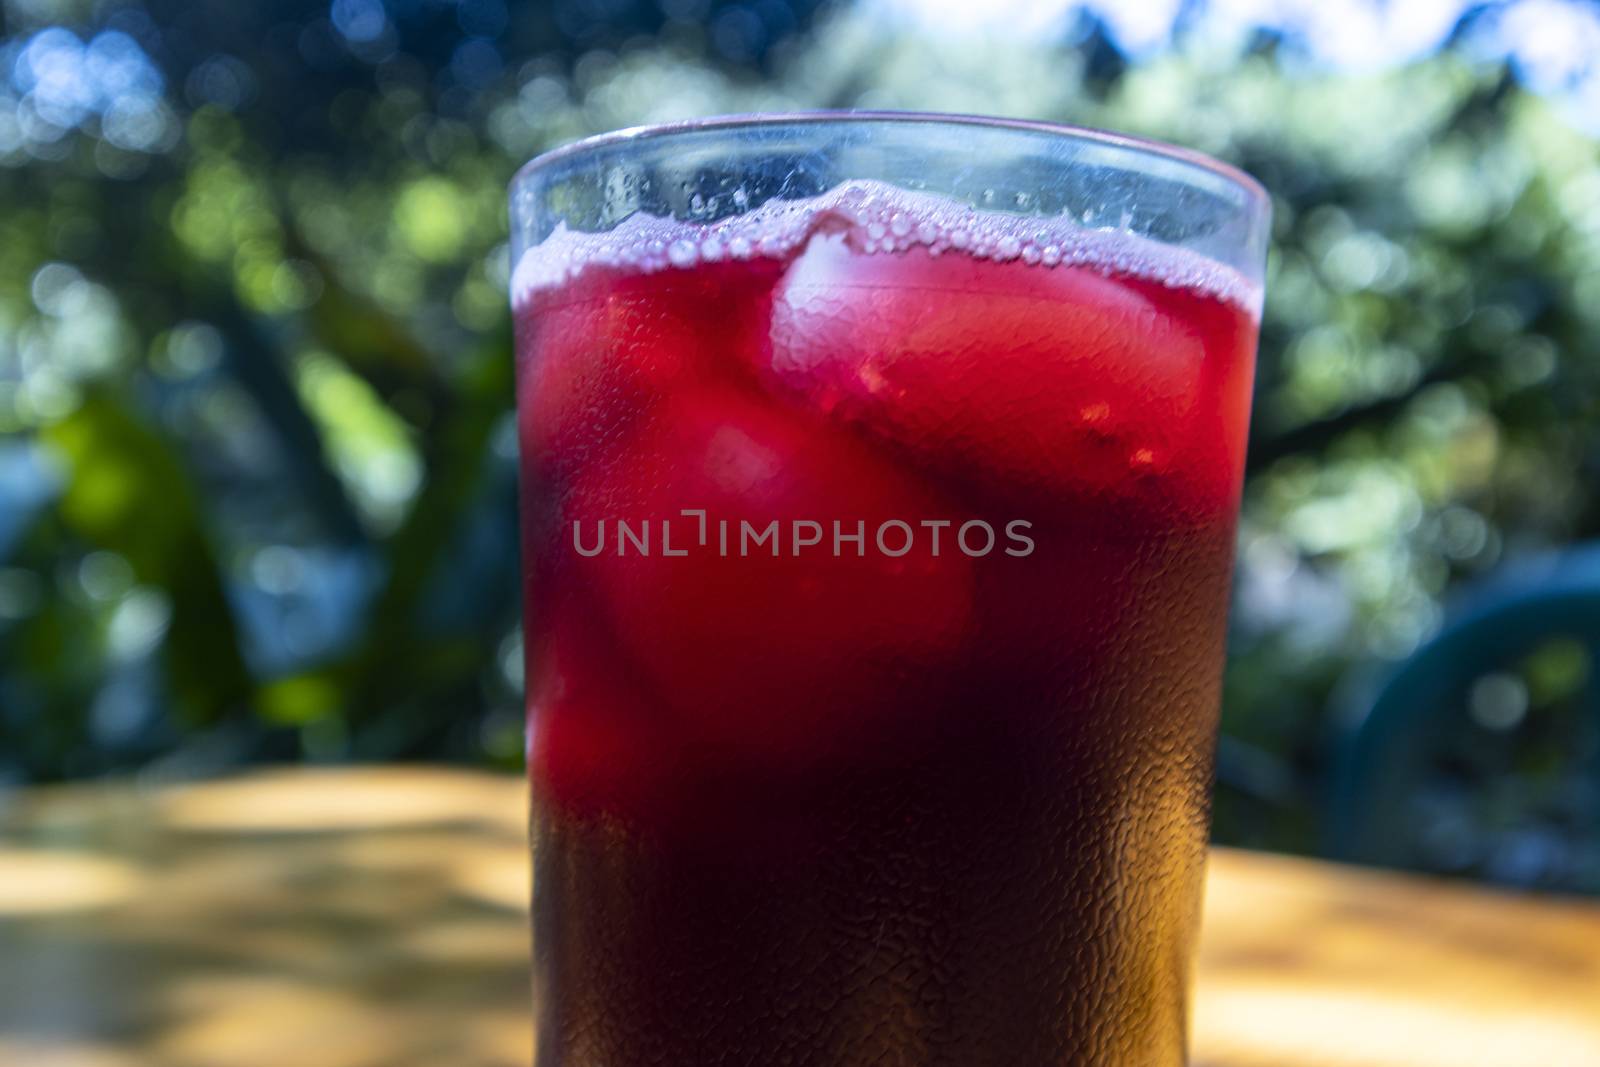 flor de jamaica drink with ice